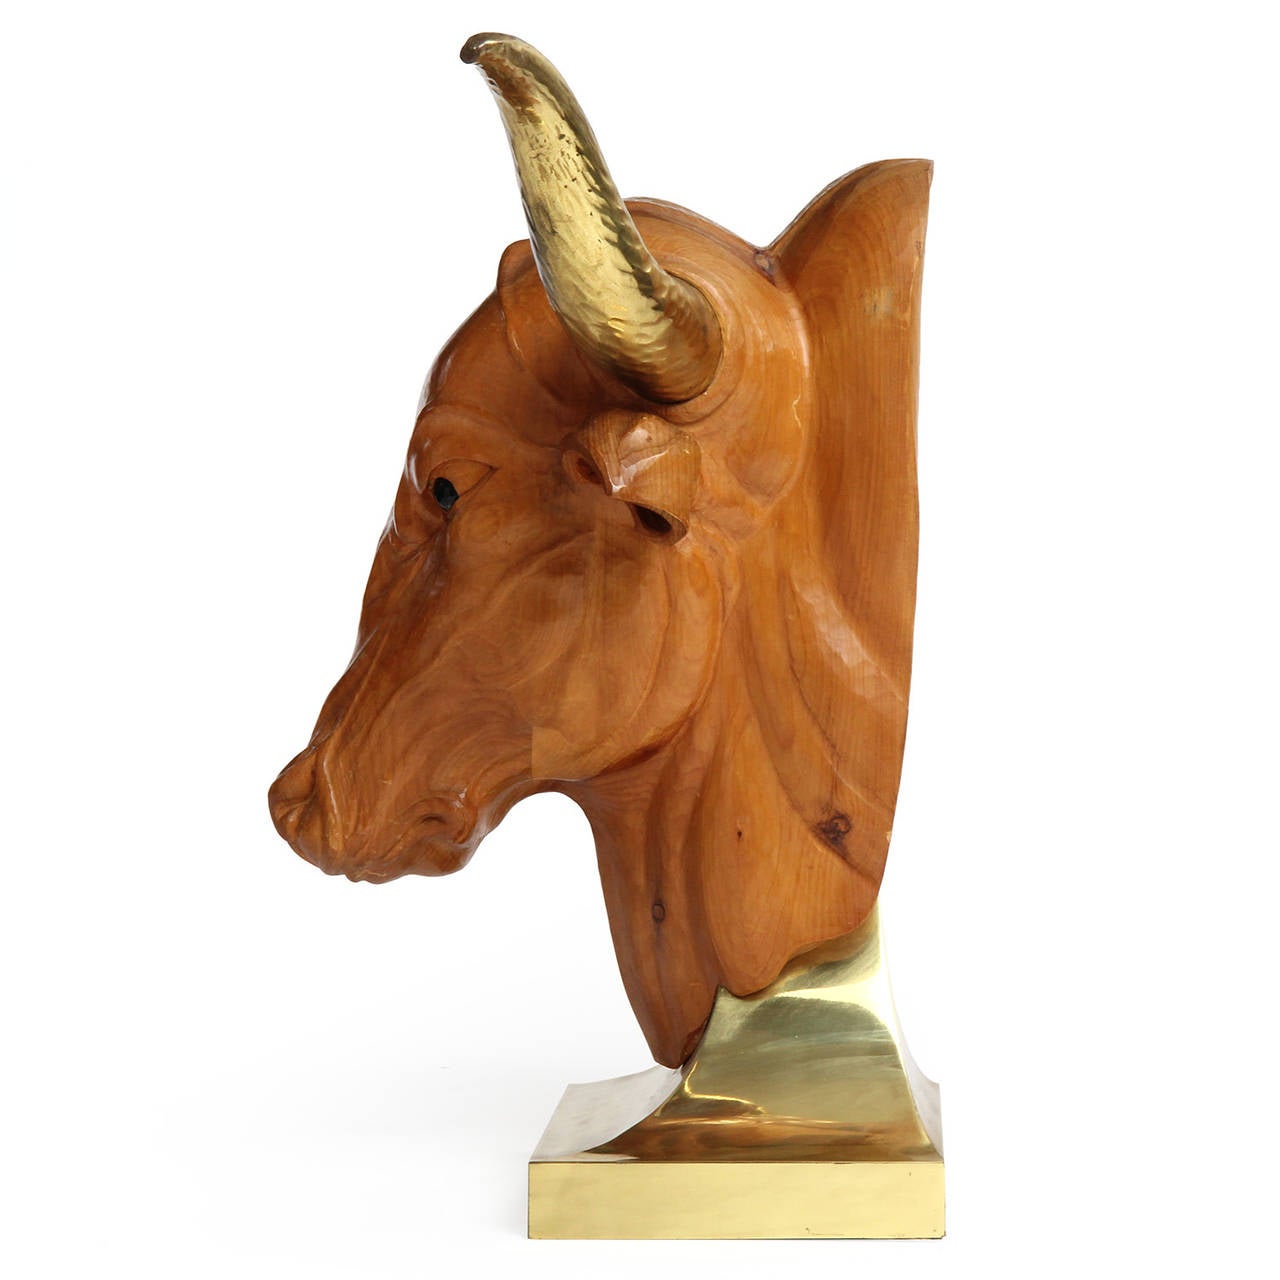 sculpture of bull